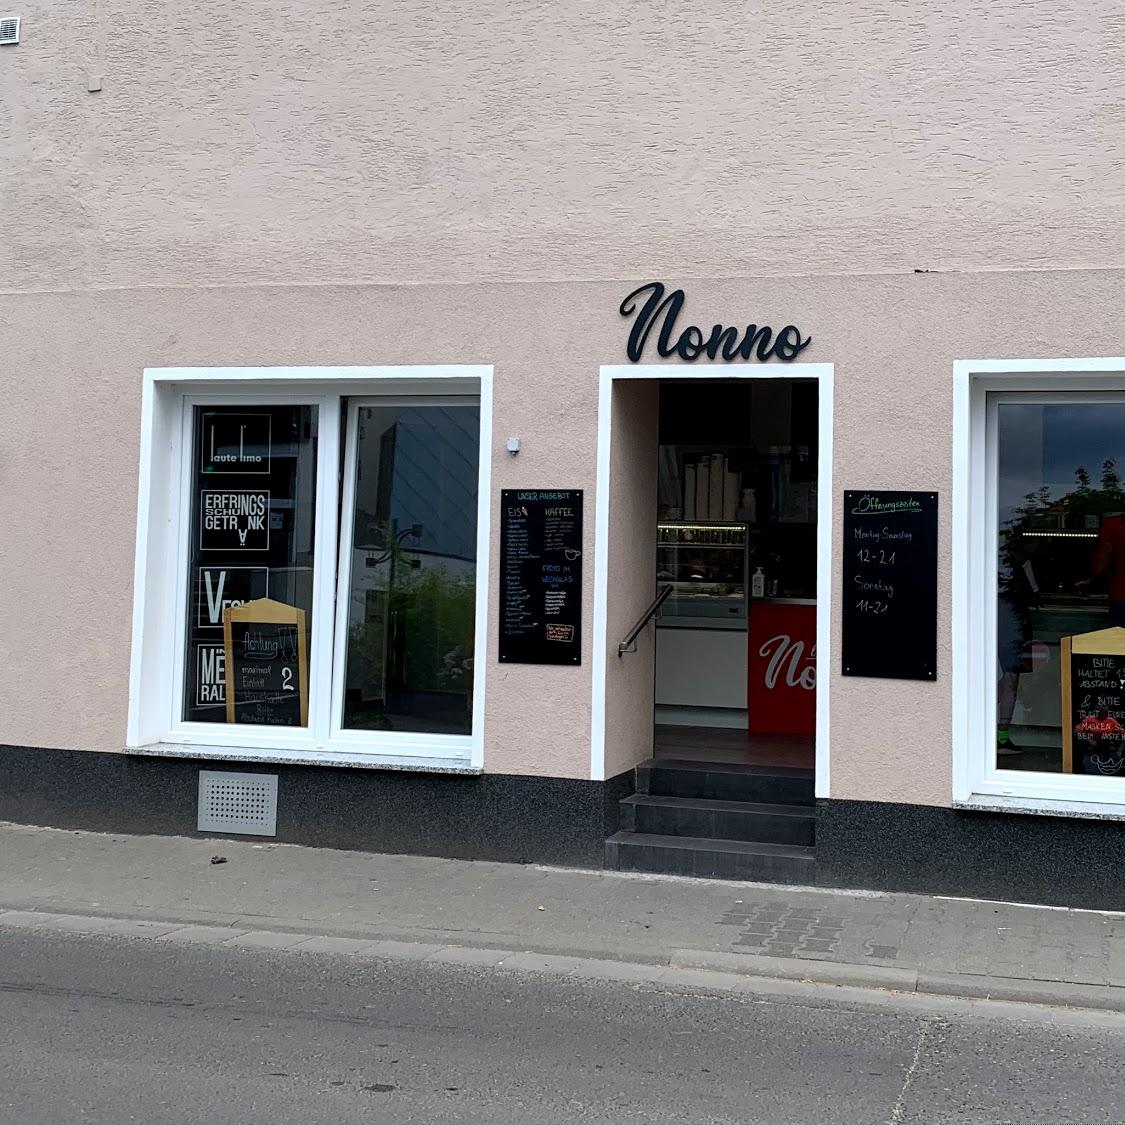 Restaurant "Eis Nonno" in Osthofen